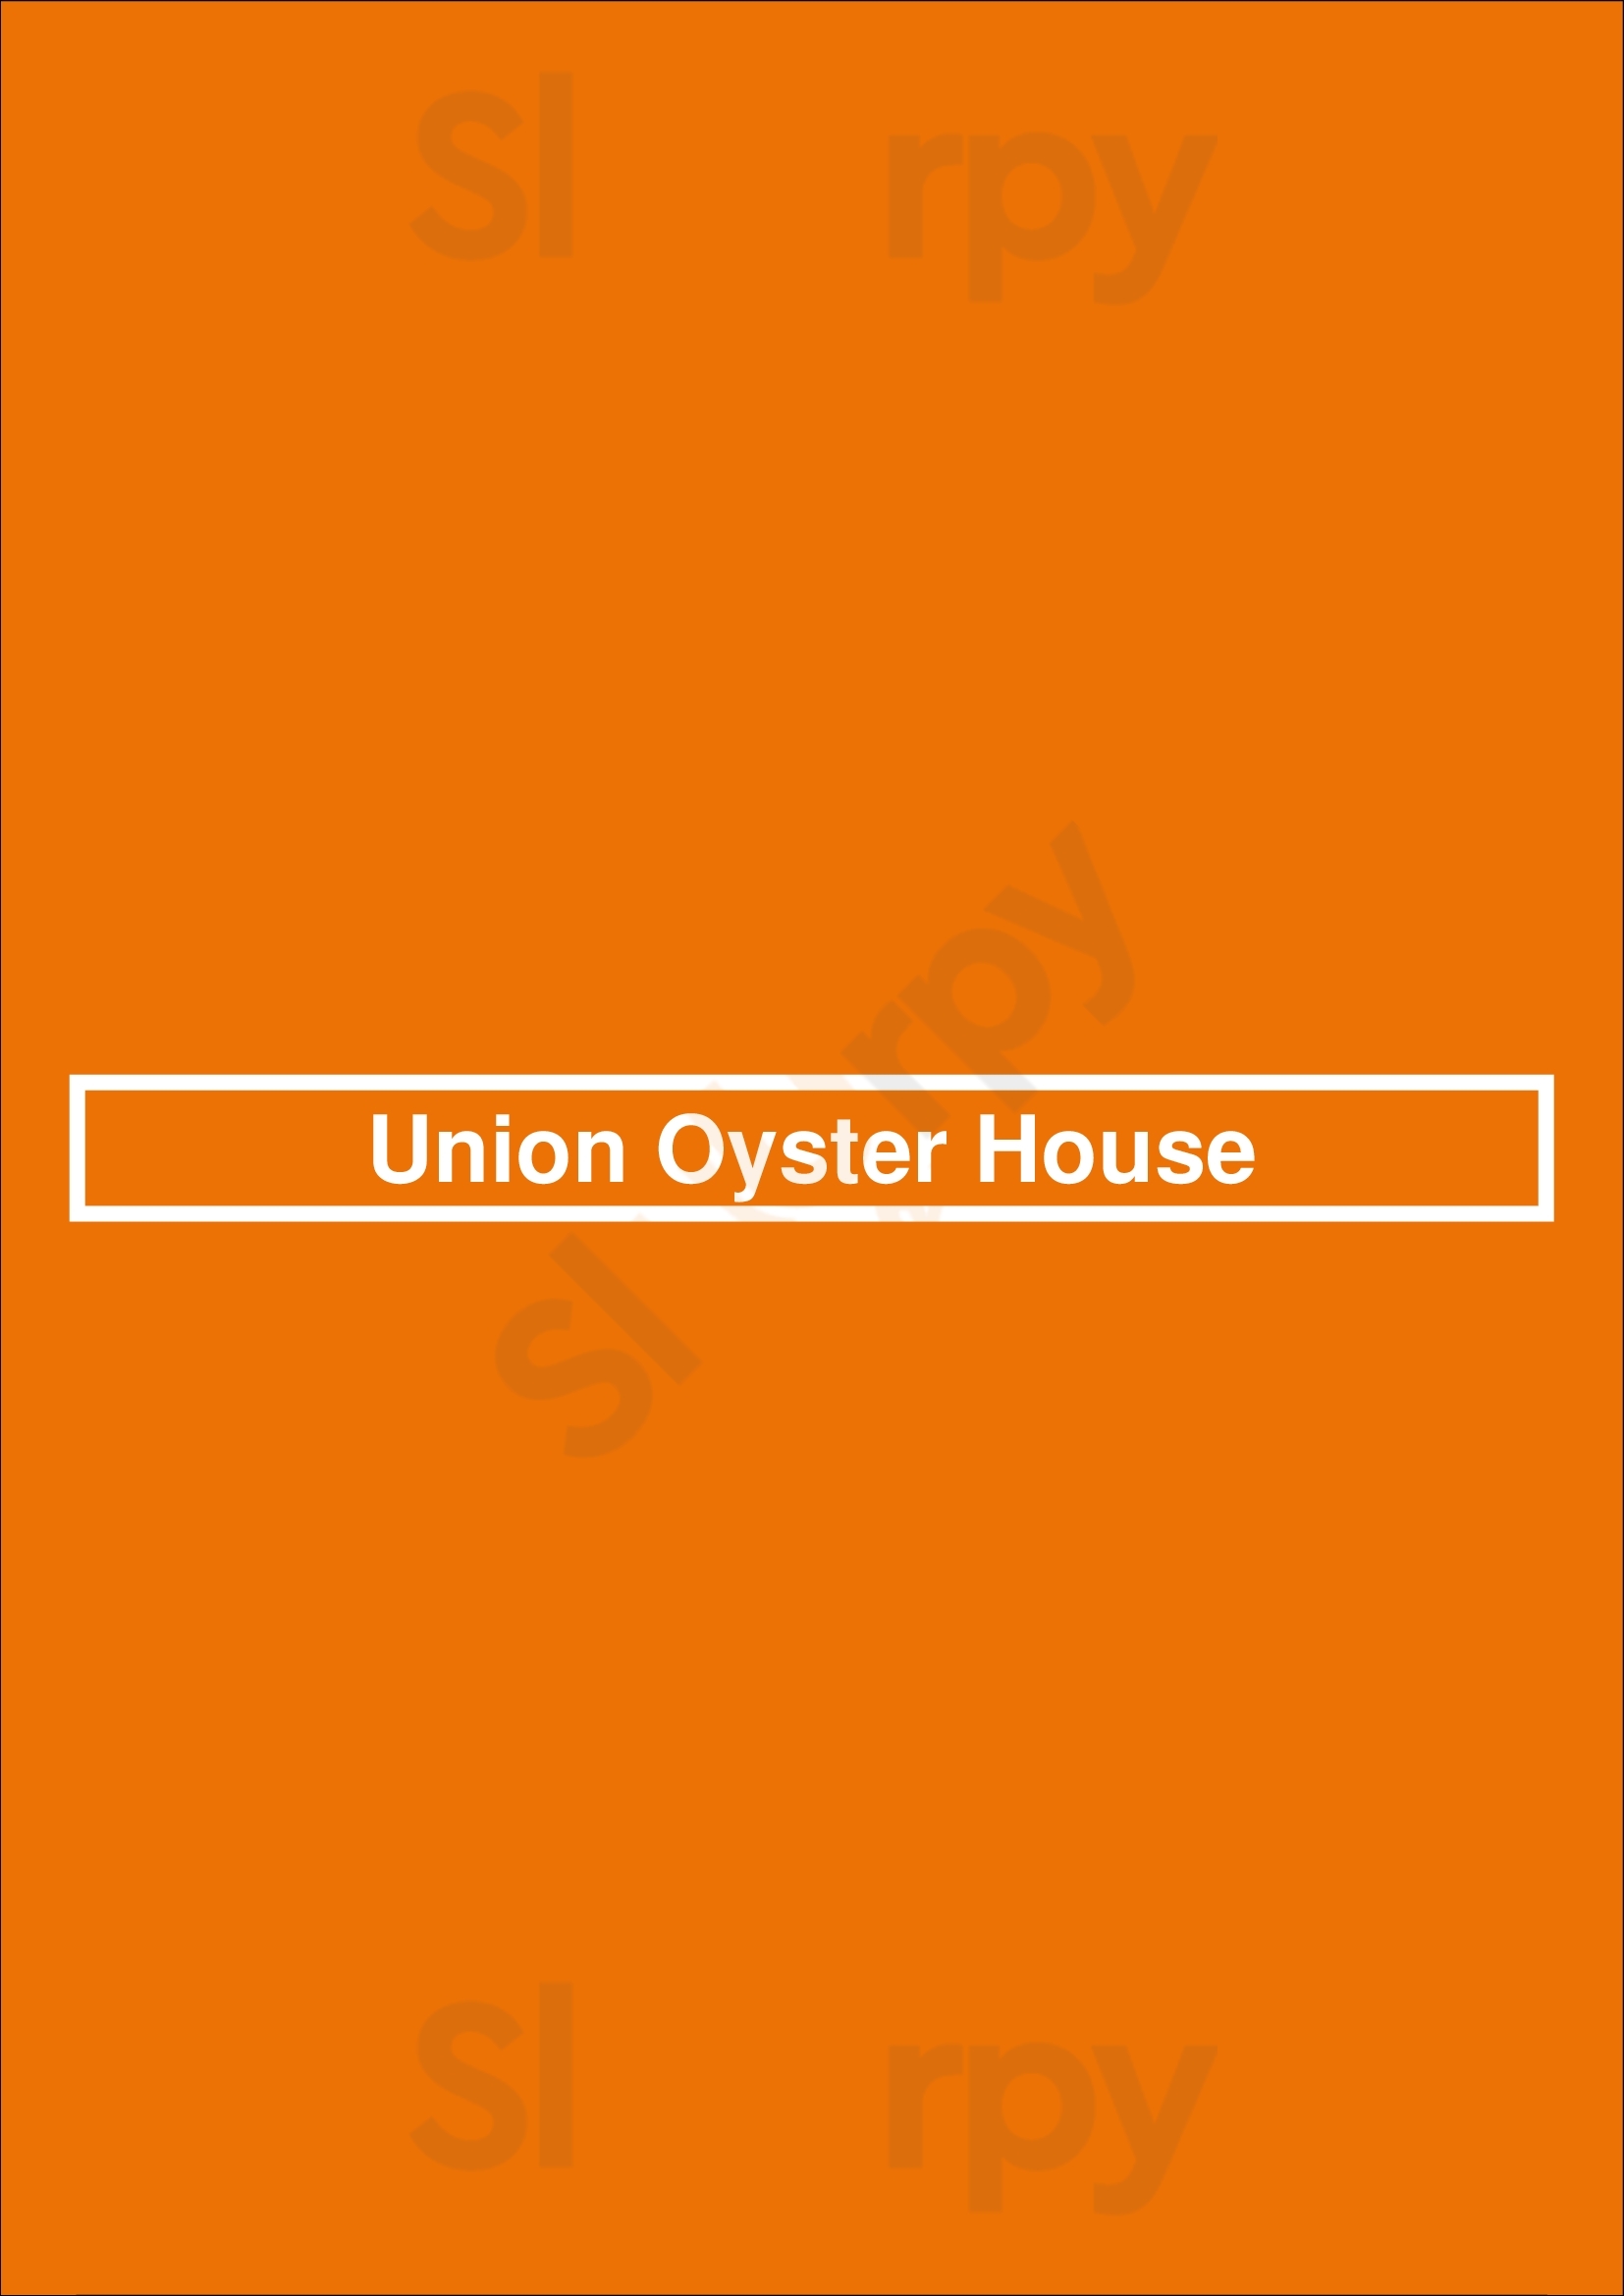 Union Oyster House Boston Menu - 1